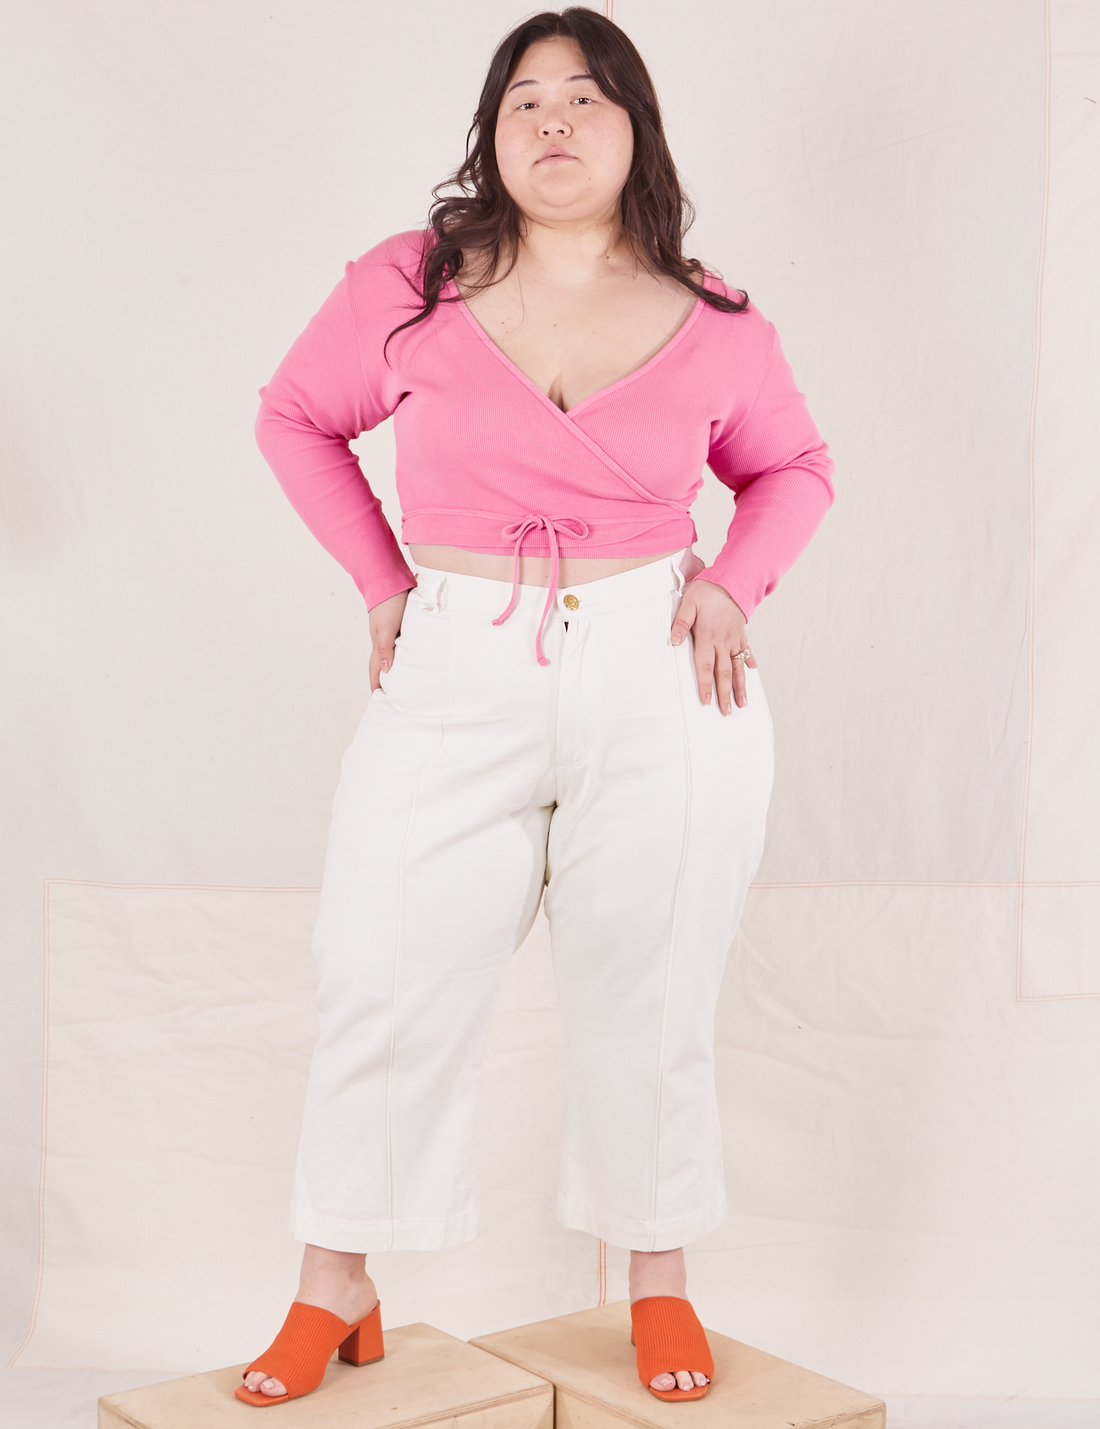 Wrap Top in Bubblegum Pink on Ashley wearing vintage off-white Western Pants